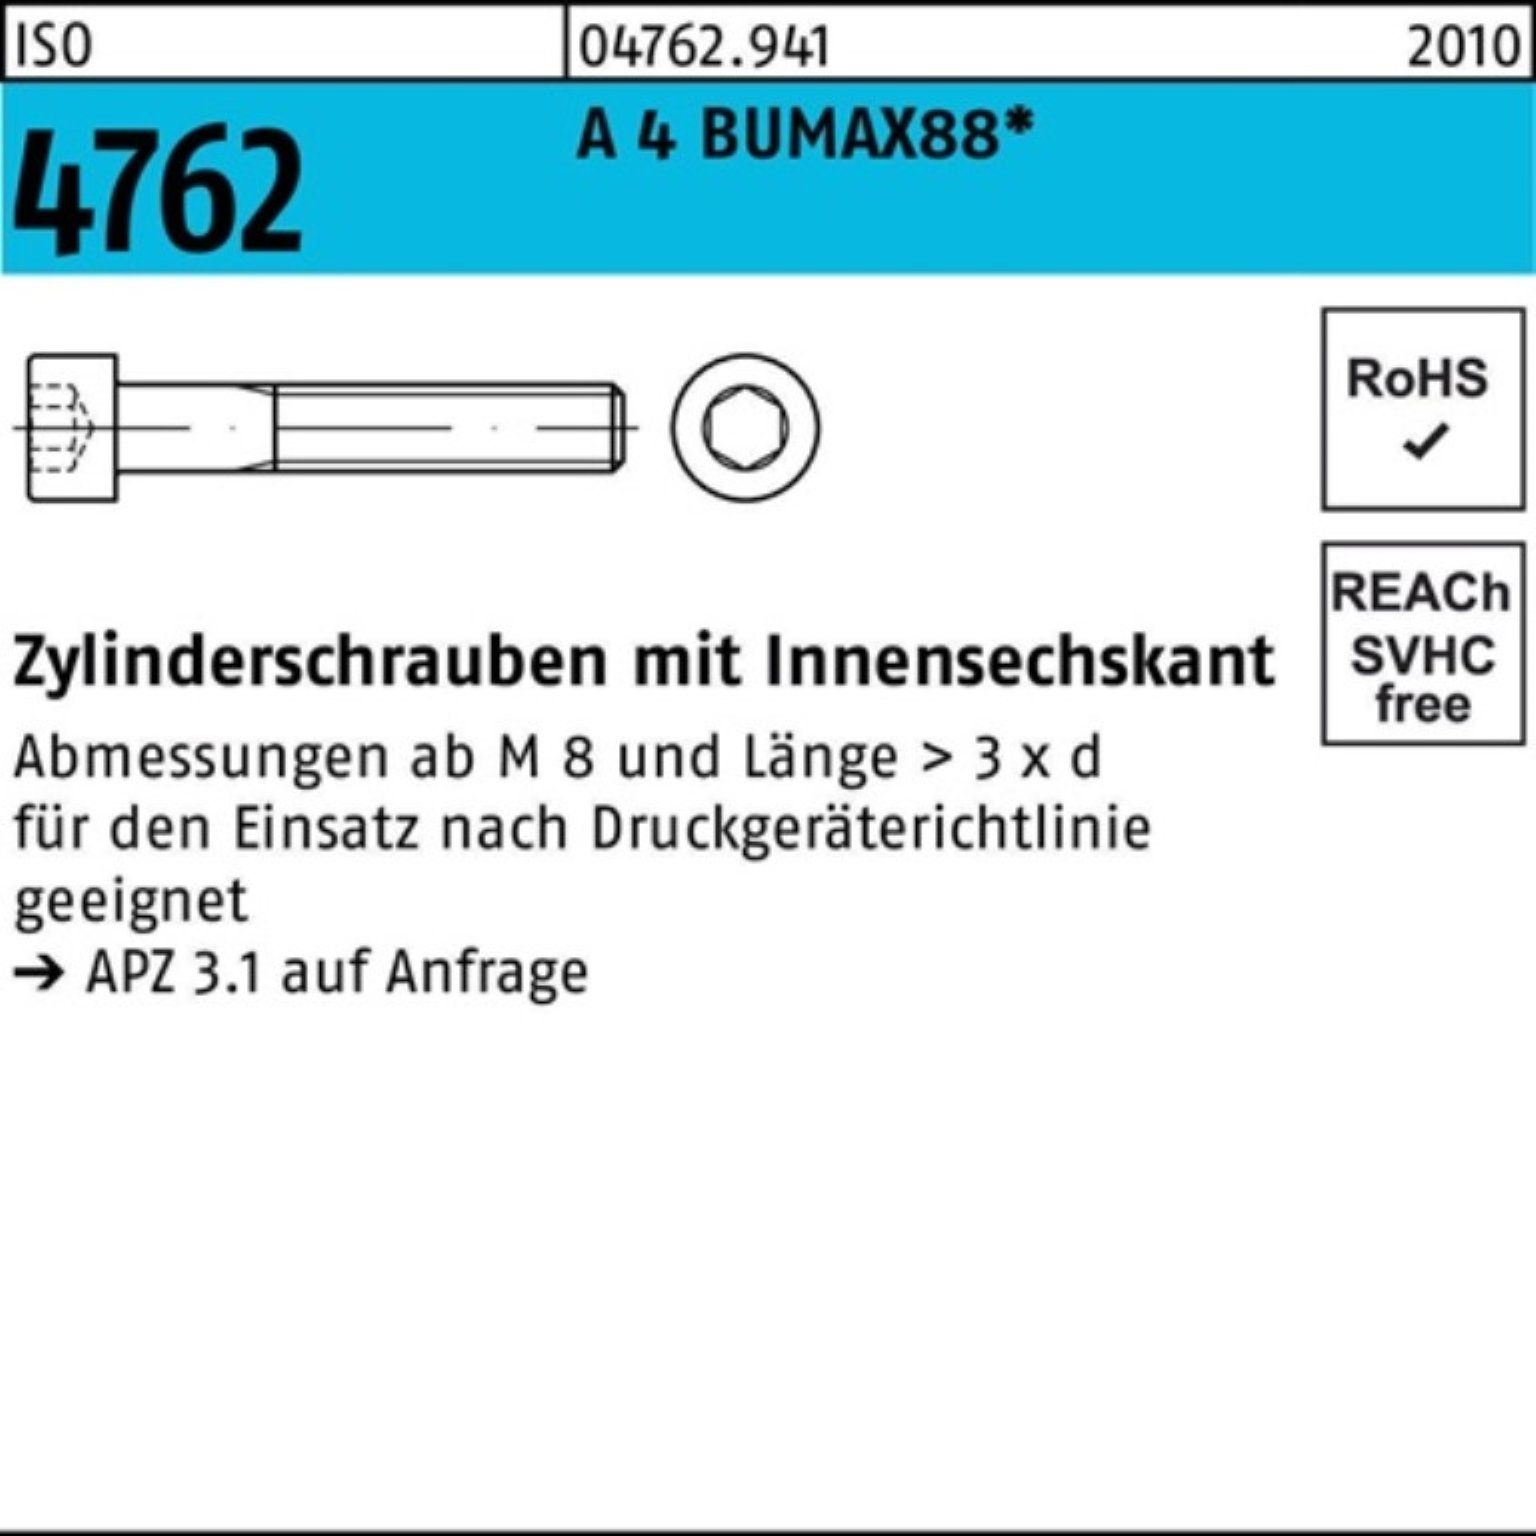 Bufab Zylinderschraube 500er Pack Zylinderschraube ISO 4762 Innen-6kt M3x 20 A 4 BUMAX88 500